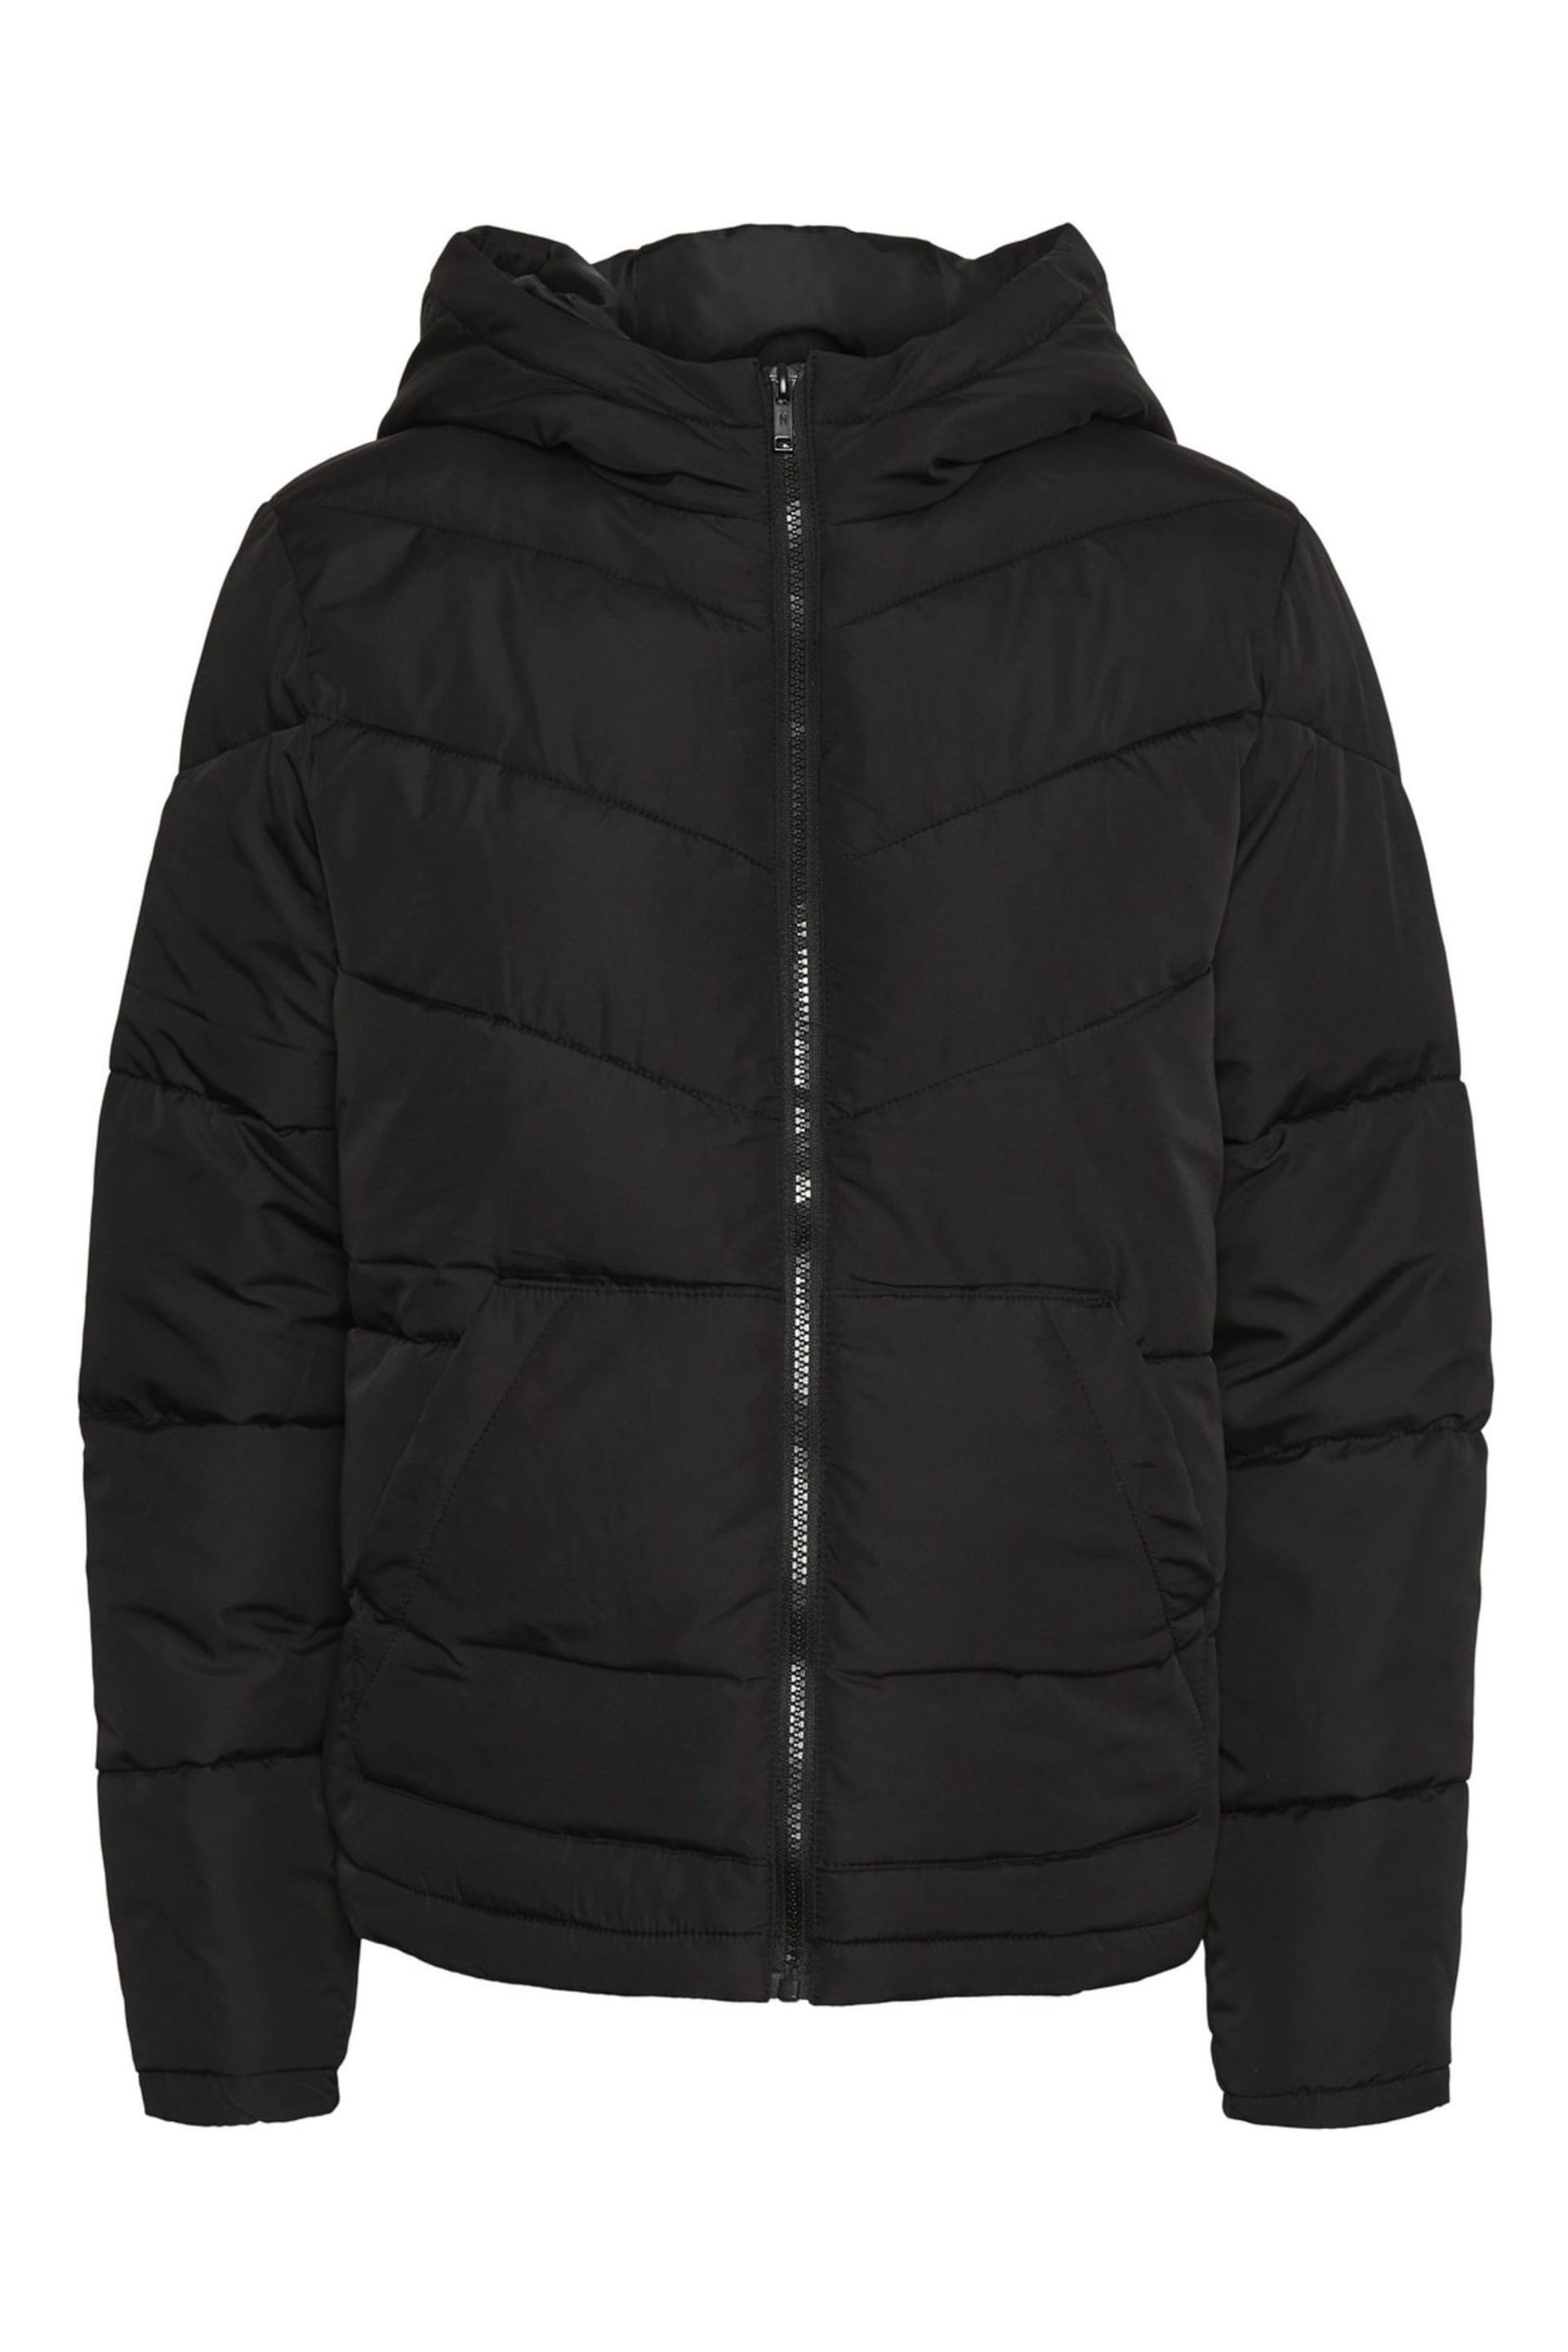 Noisy May Black Padded Jacket With Hood - Image 4 of 5